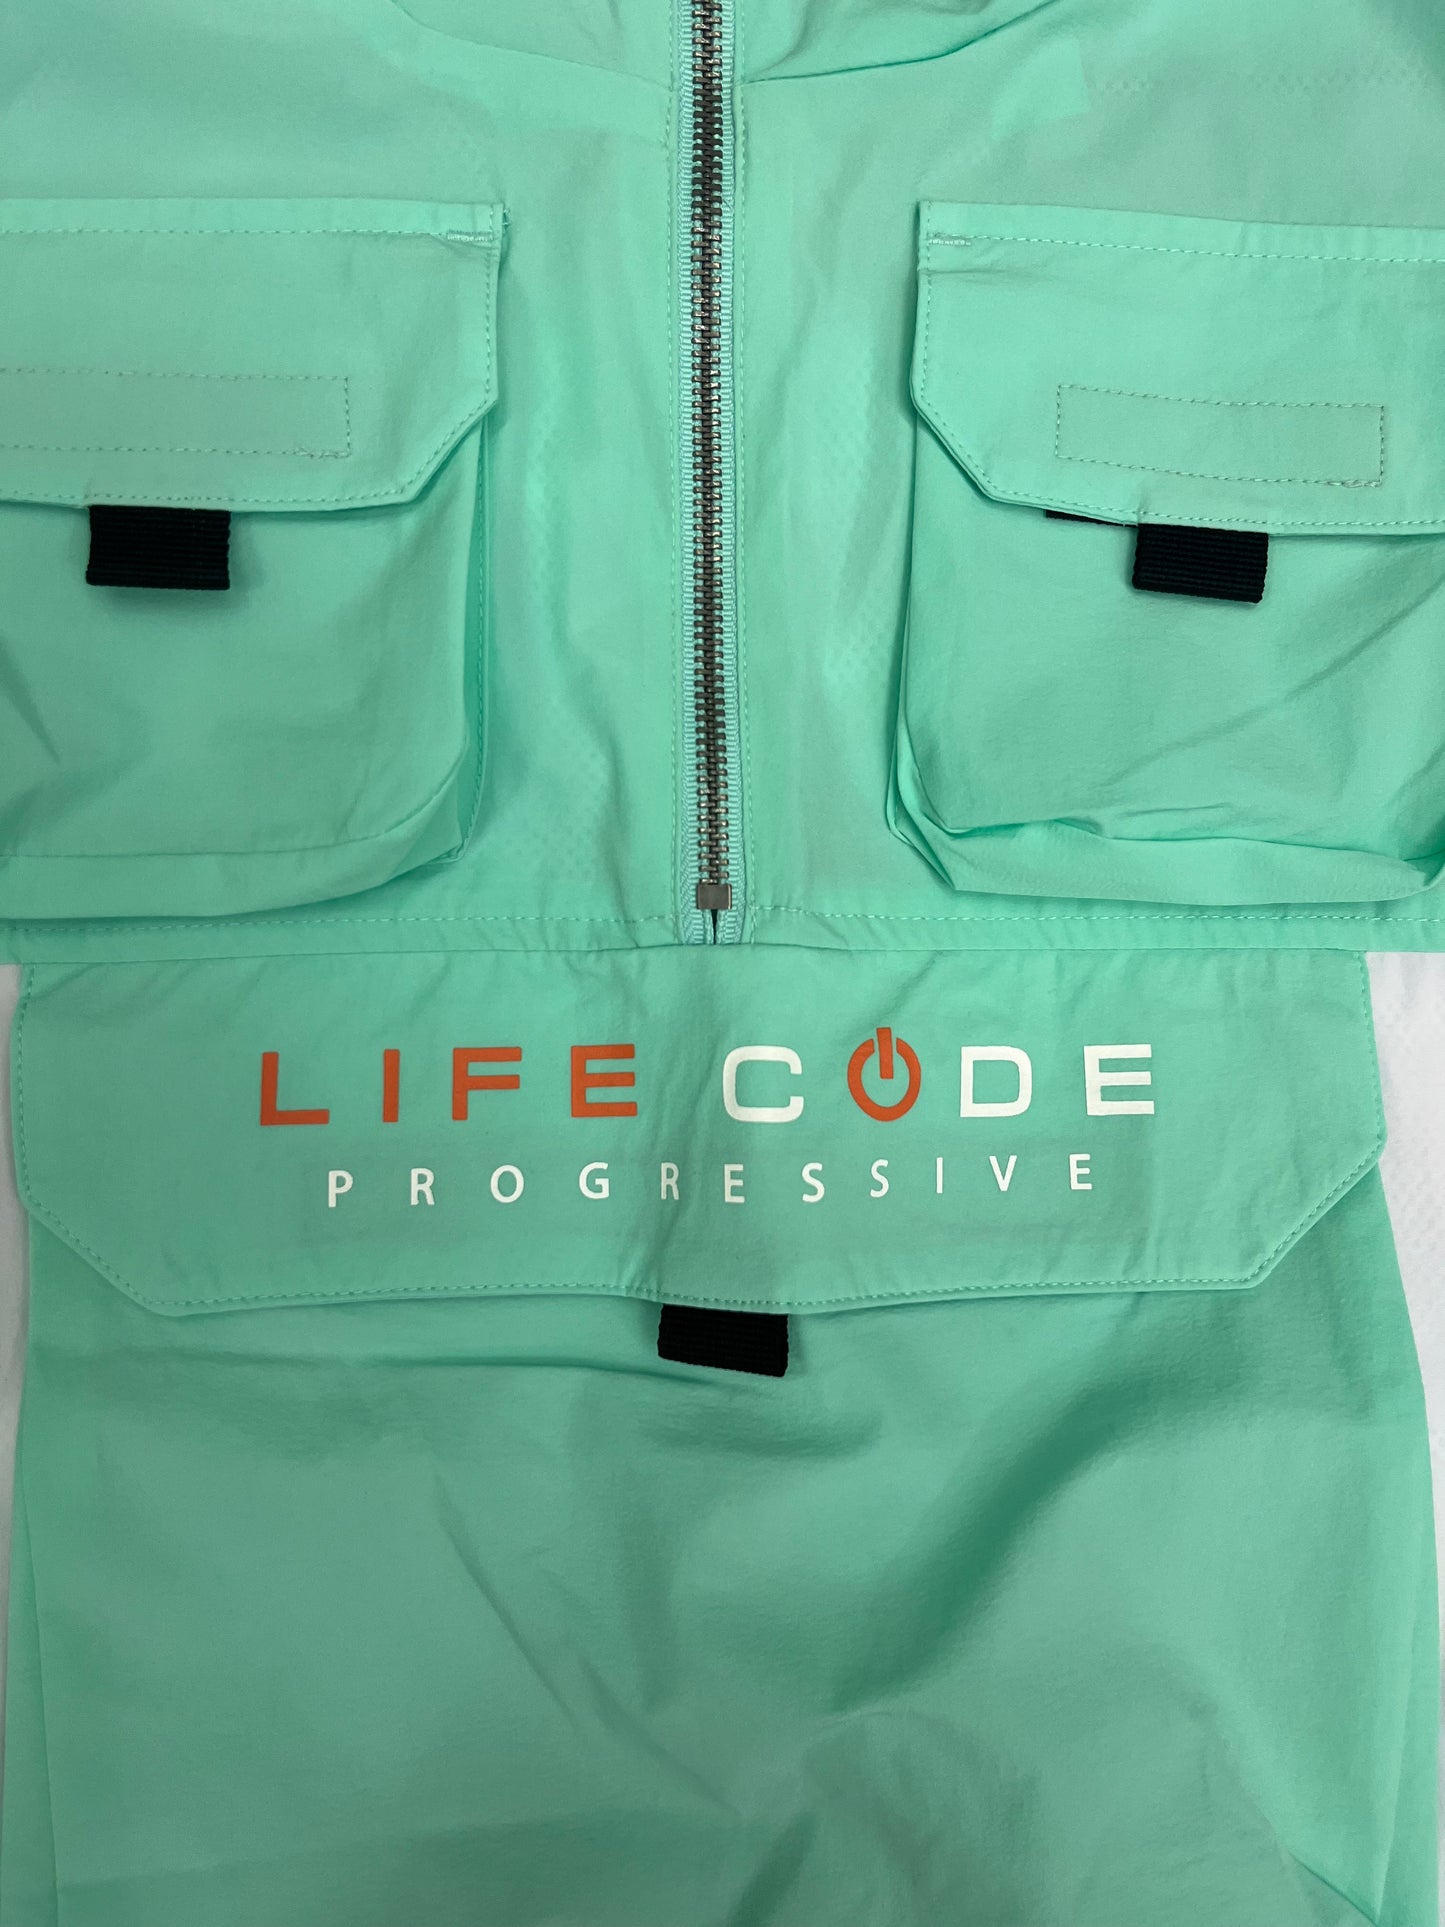 Life Code Progressive Brand